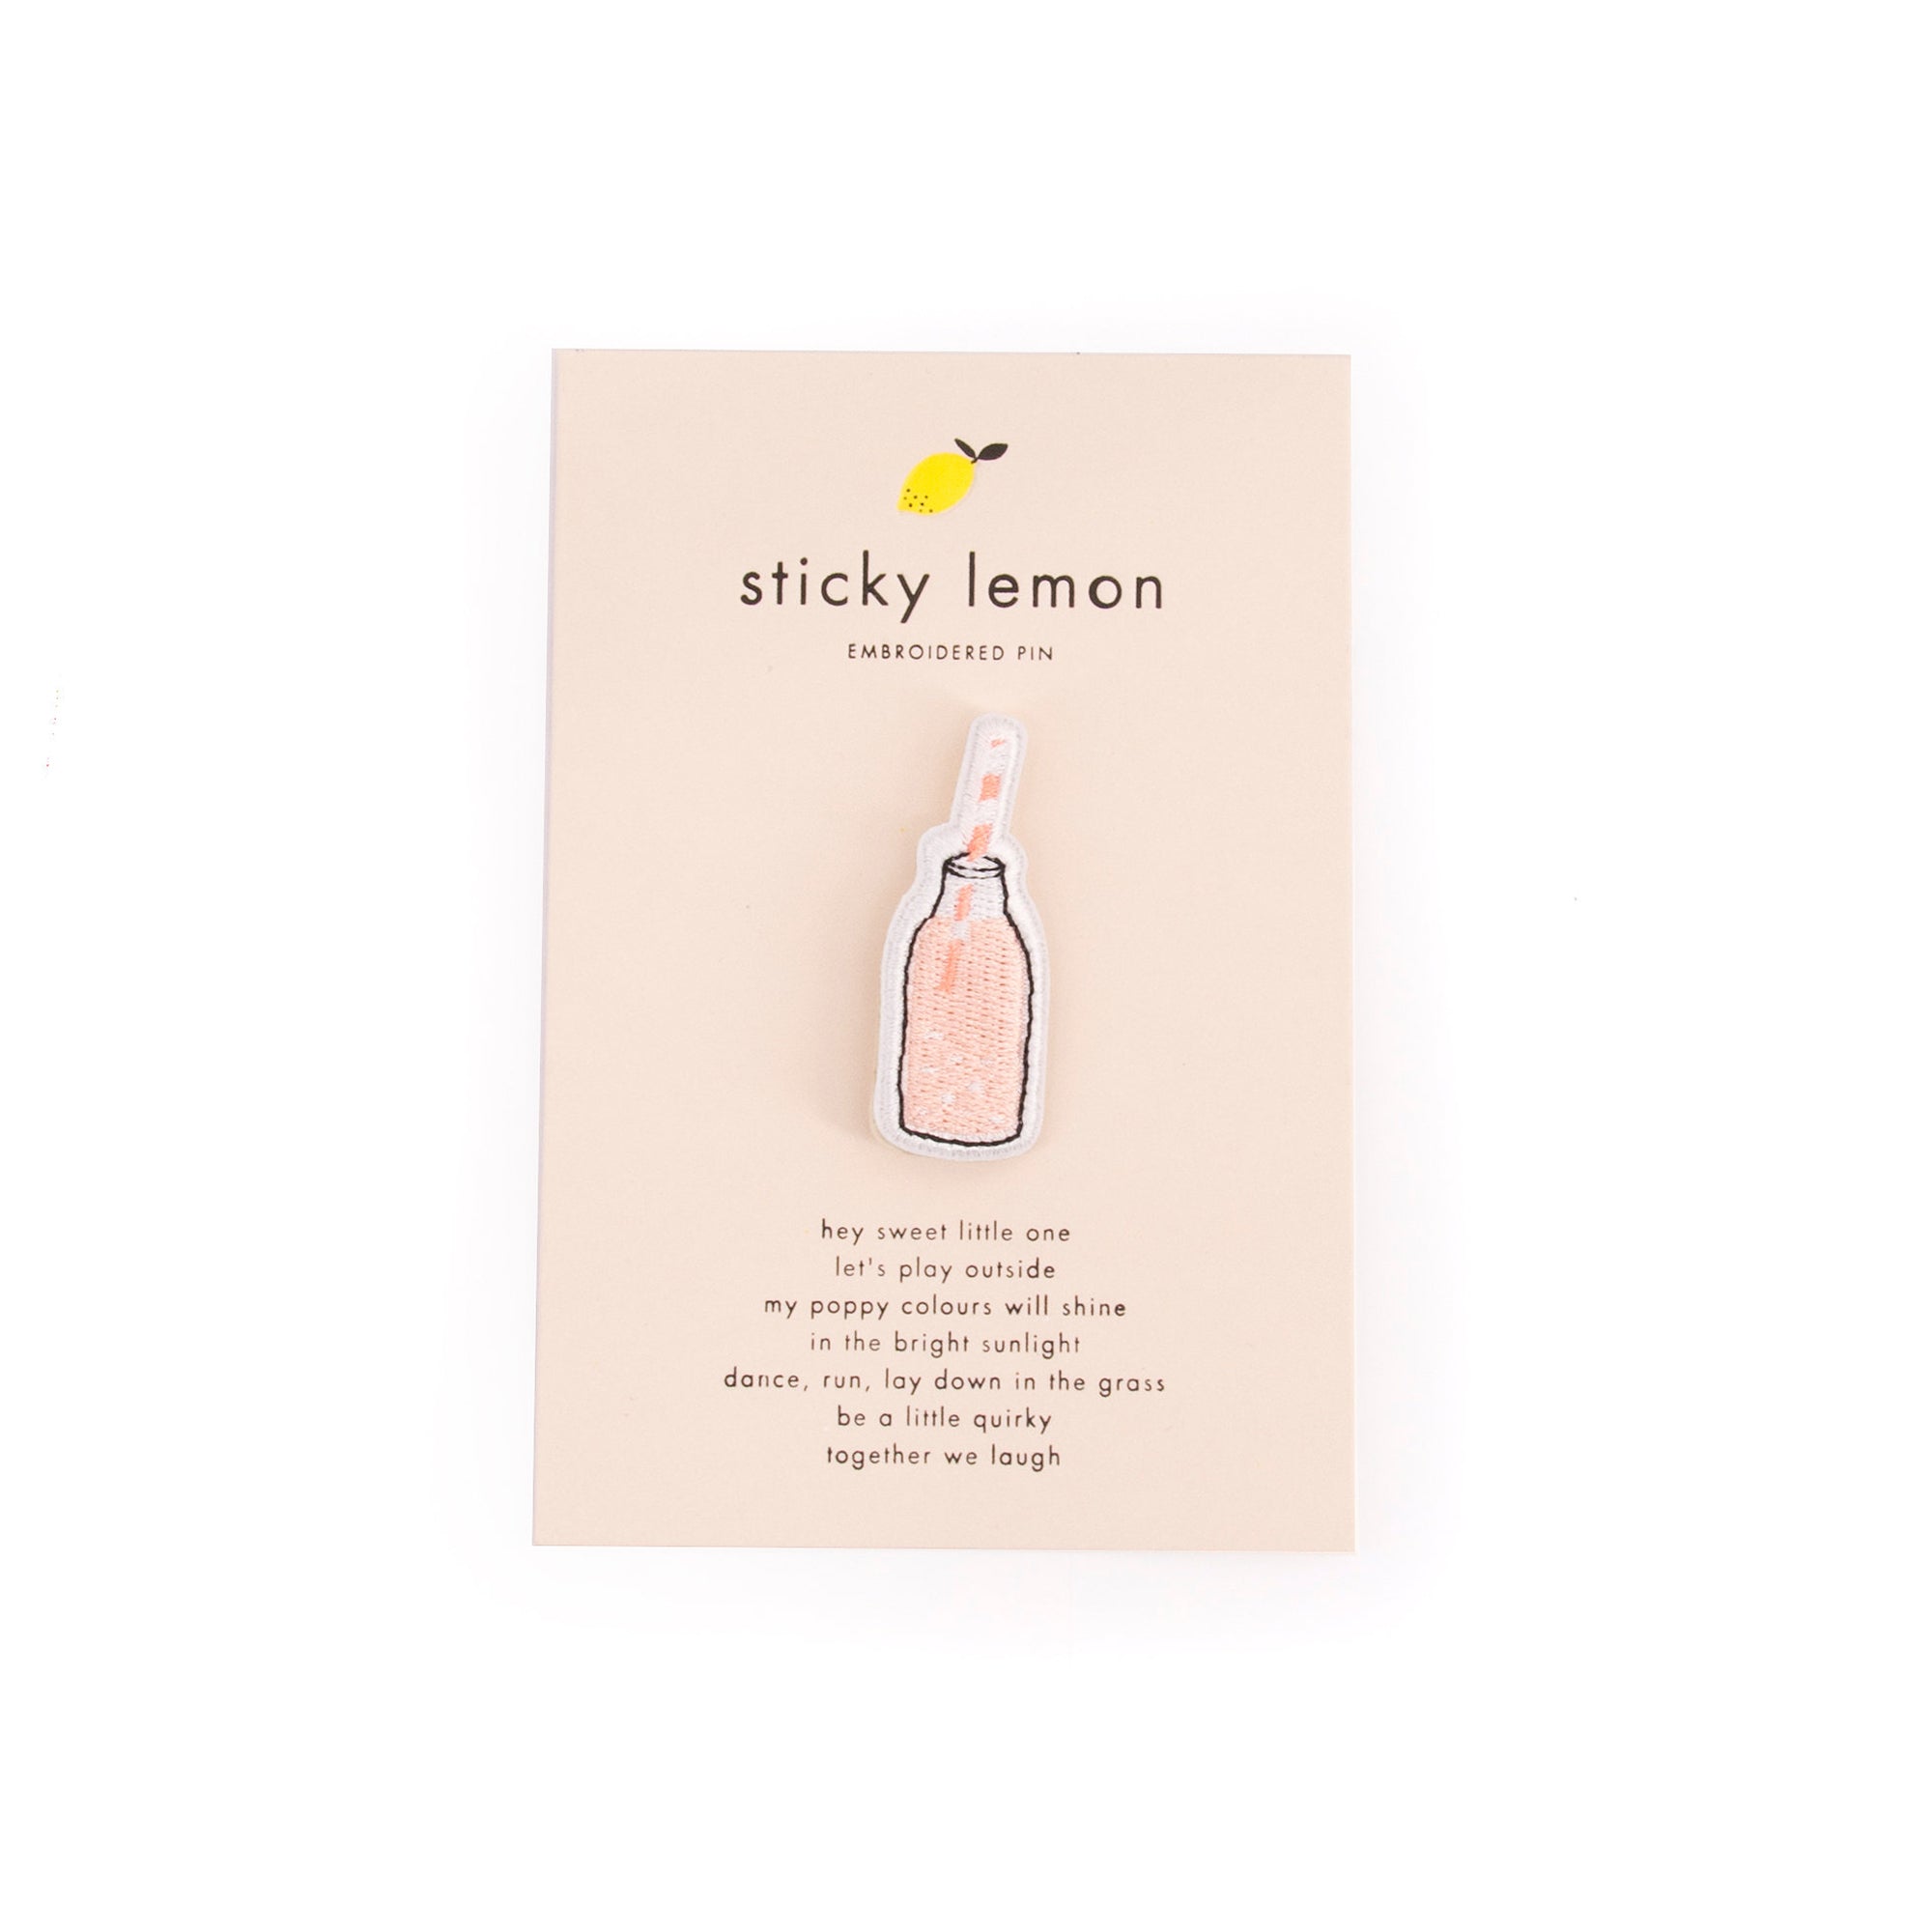 Sticky lemon Embroidered Pins Bottle